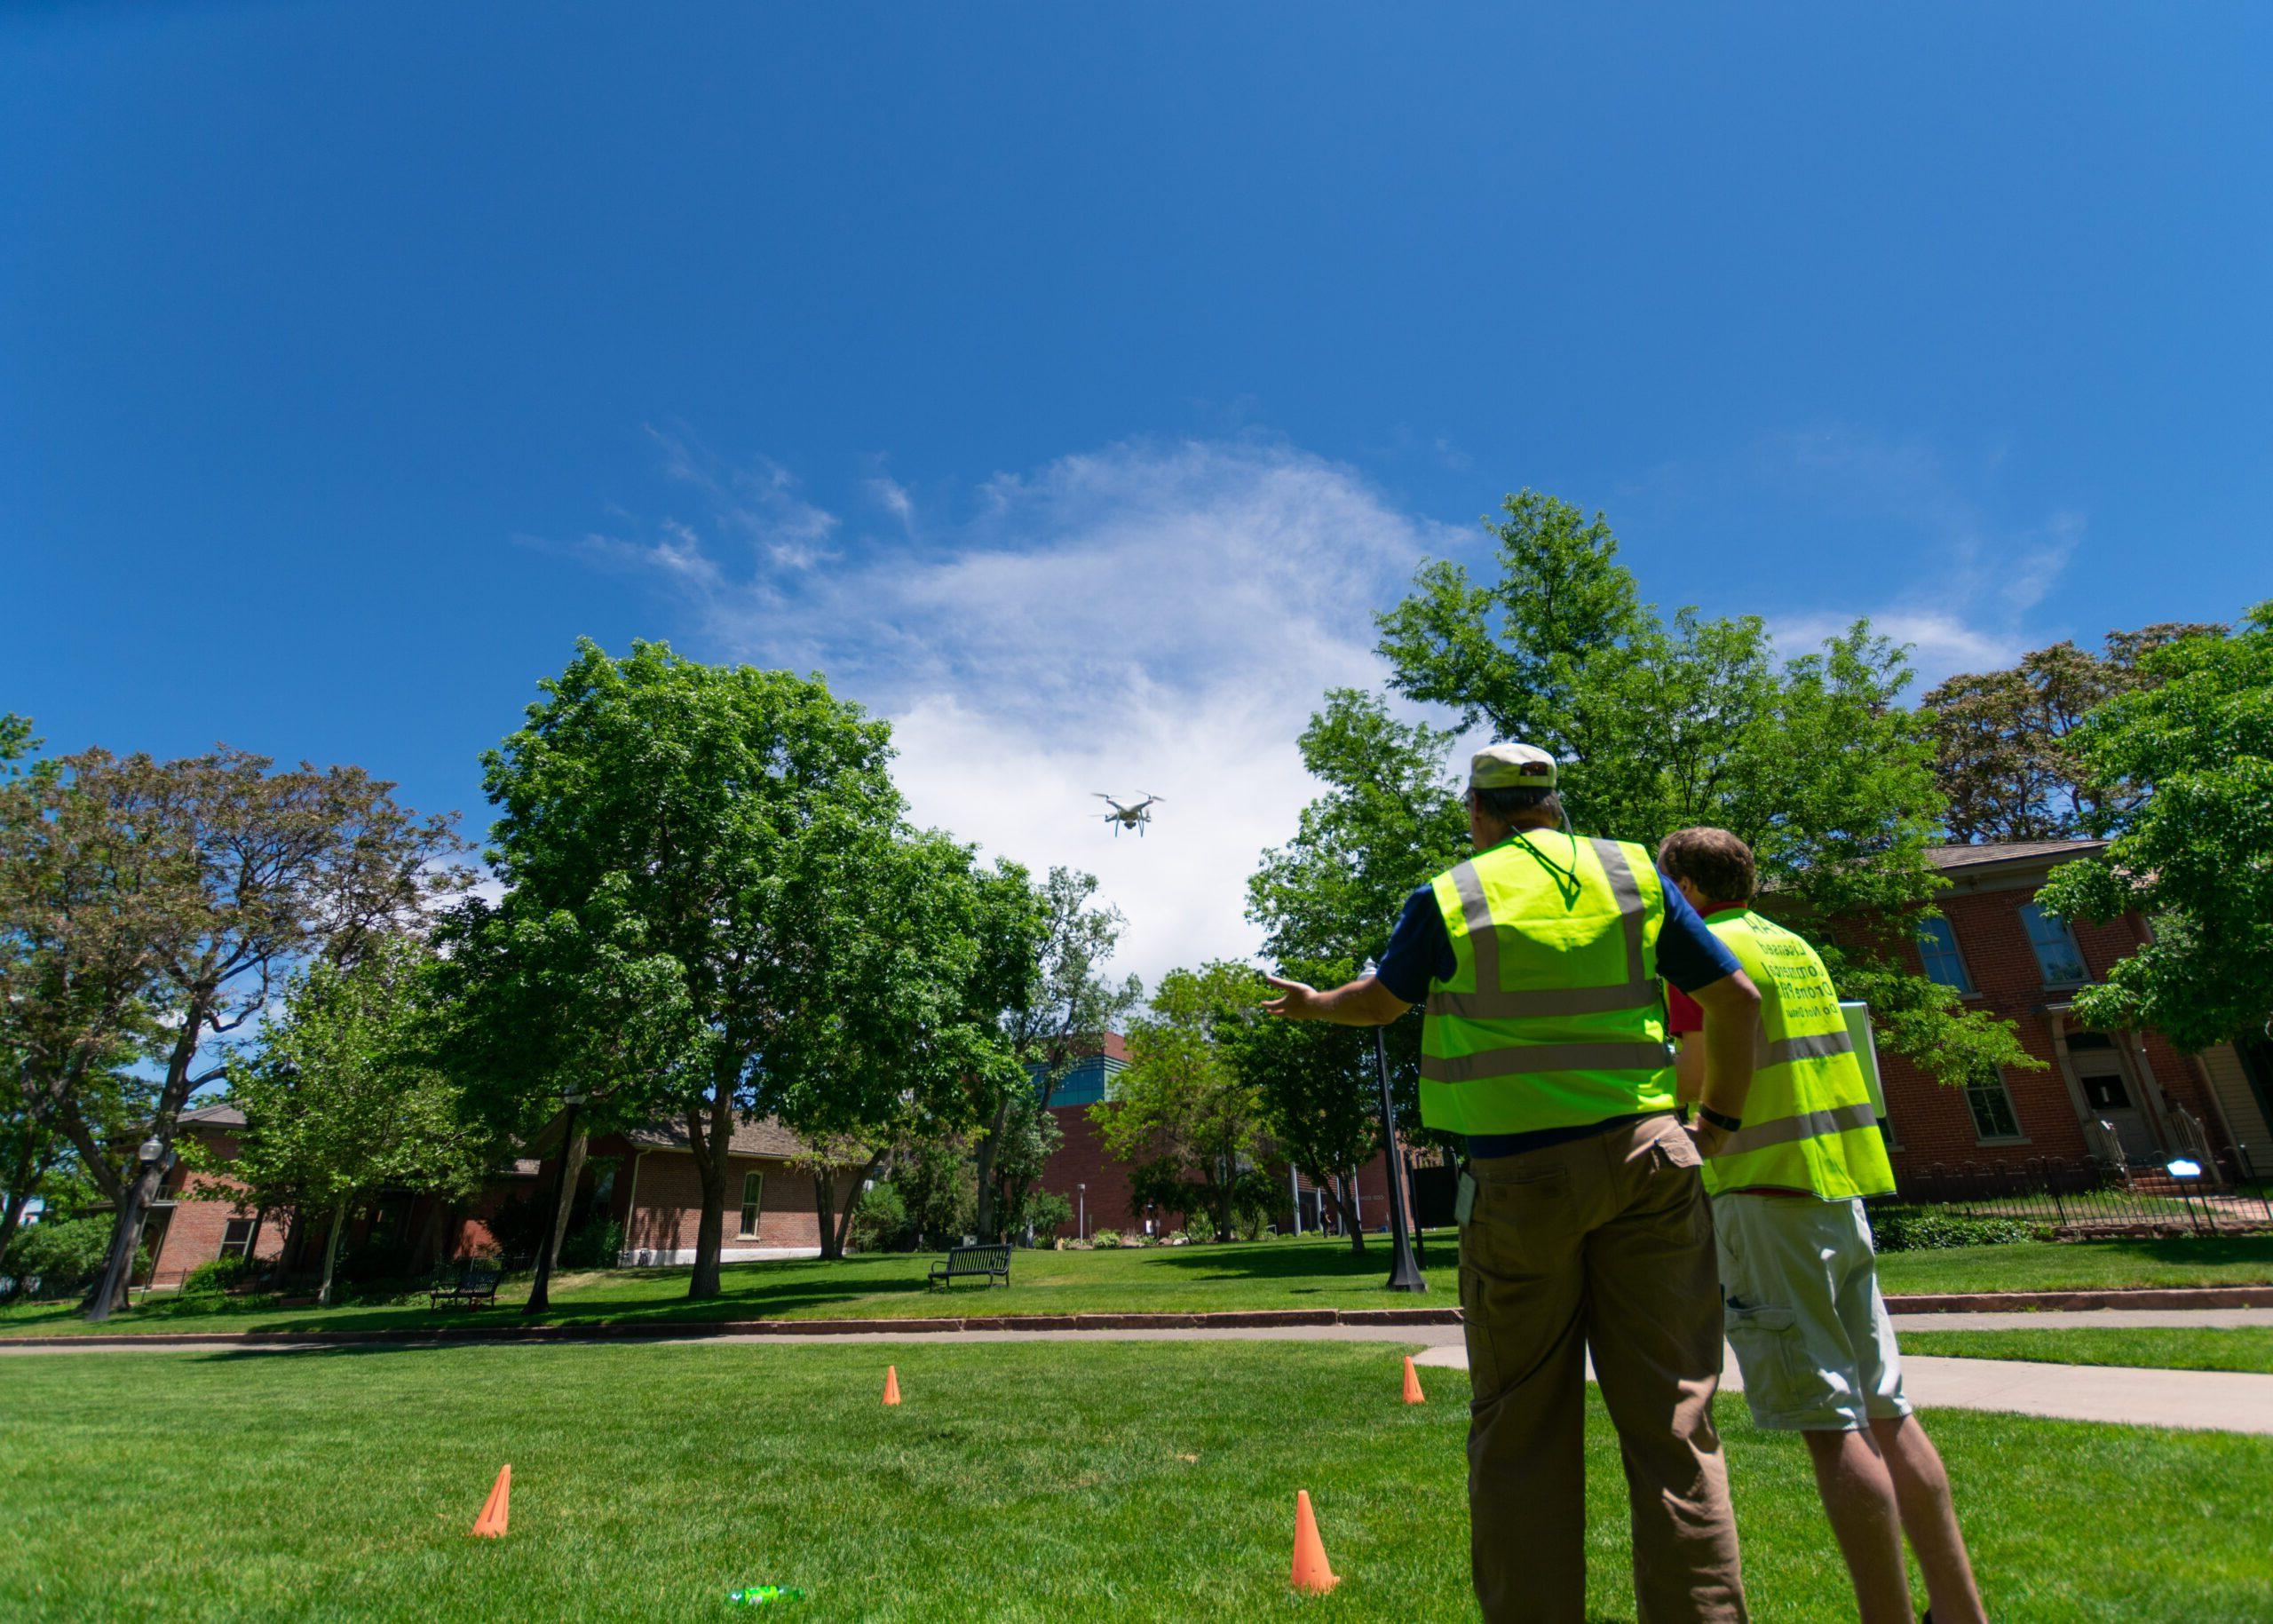 Josh Noel, 项目协调人, 和亚历克斯·杜桑, 航空技师, 用无人机测绘第九街公园吗.